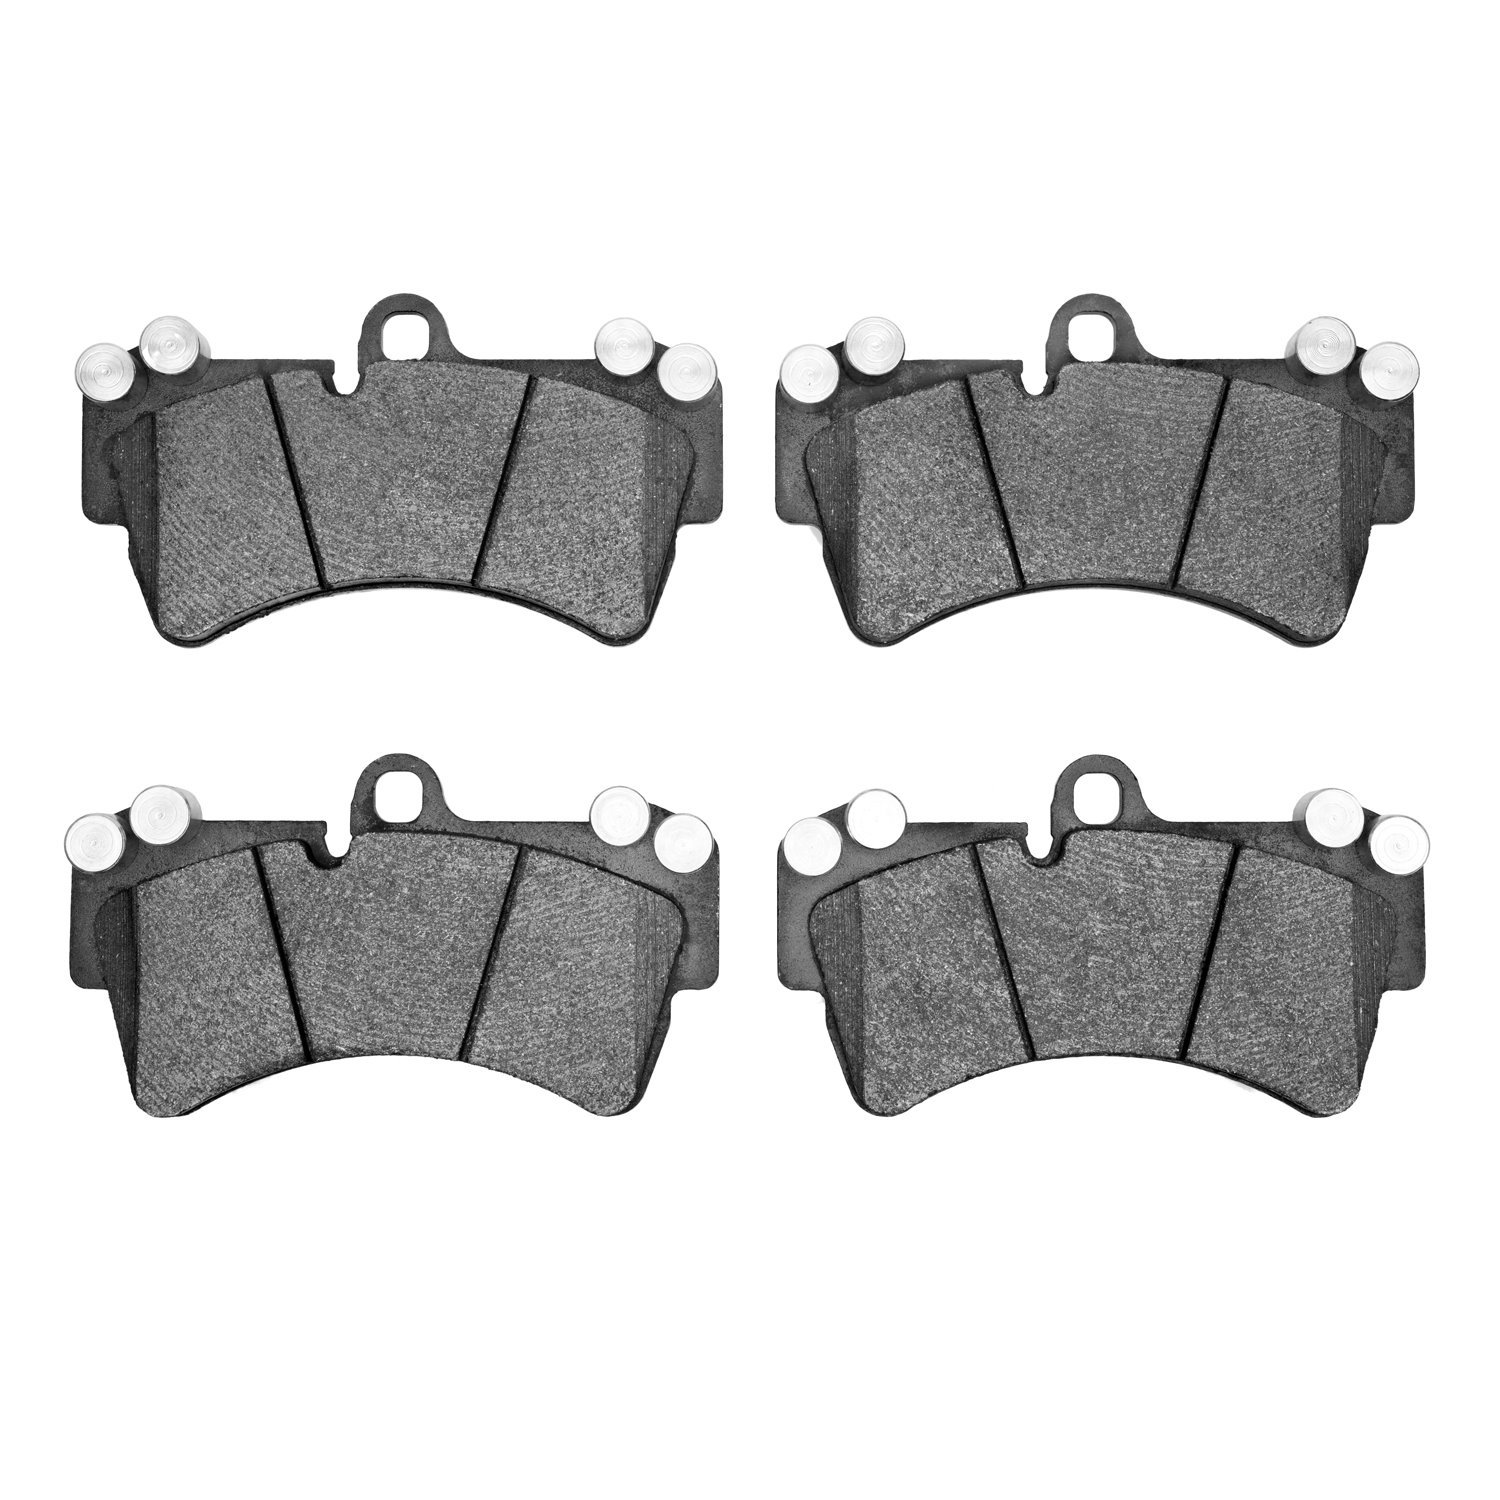 1310-0977-00 3000-Series Ceramic Brake Pads, 2003-2015 Multiple Makes/Models, Position: Front